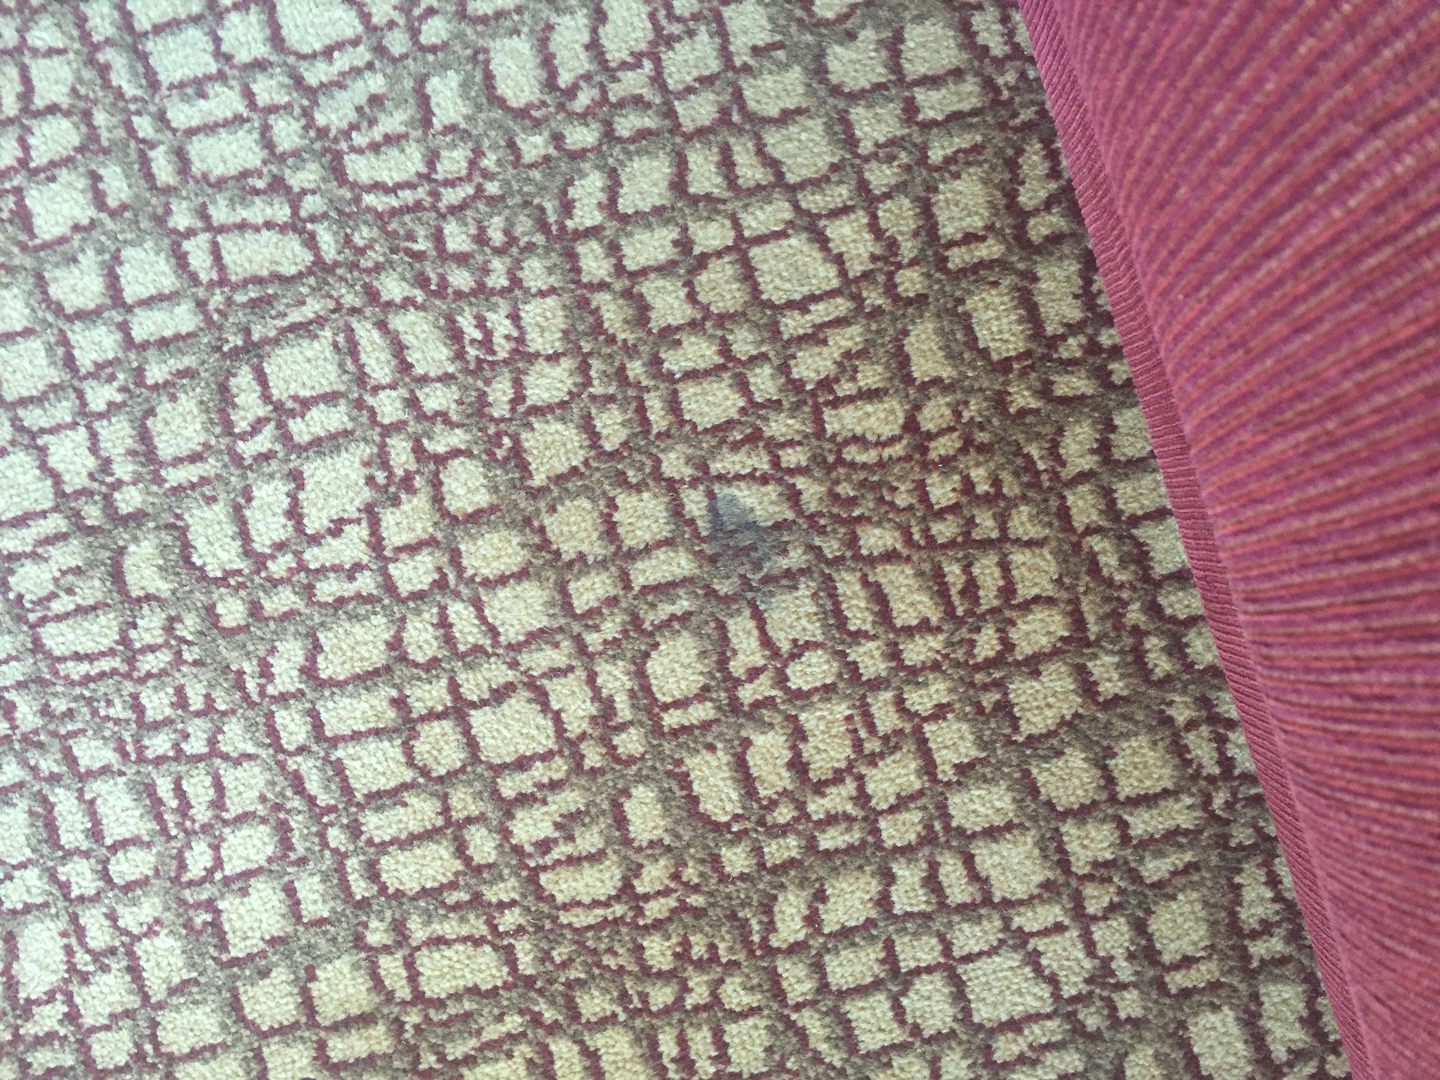 Stain on carpet